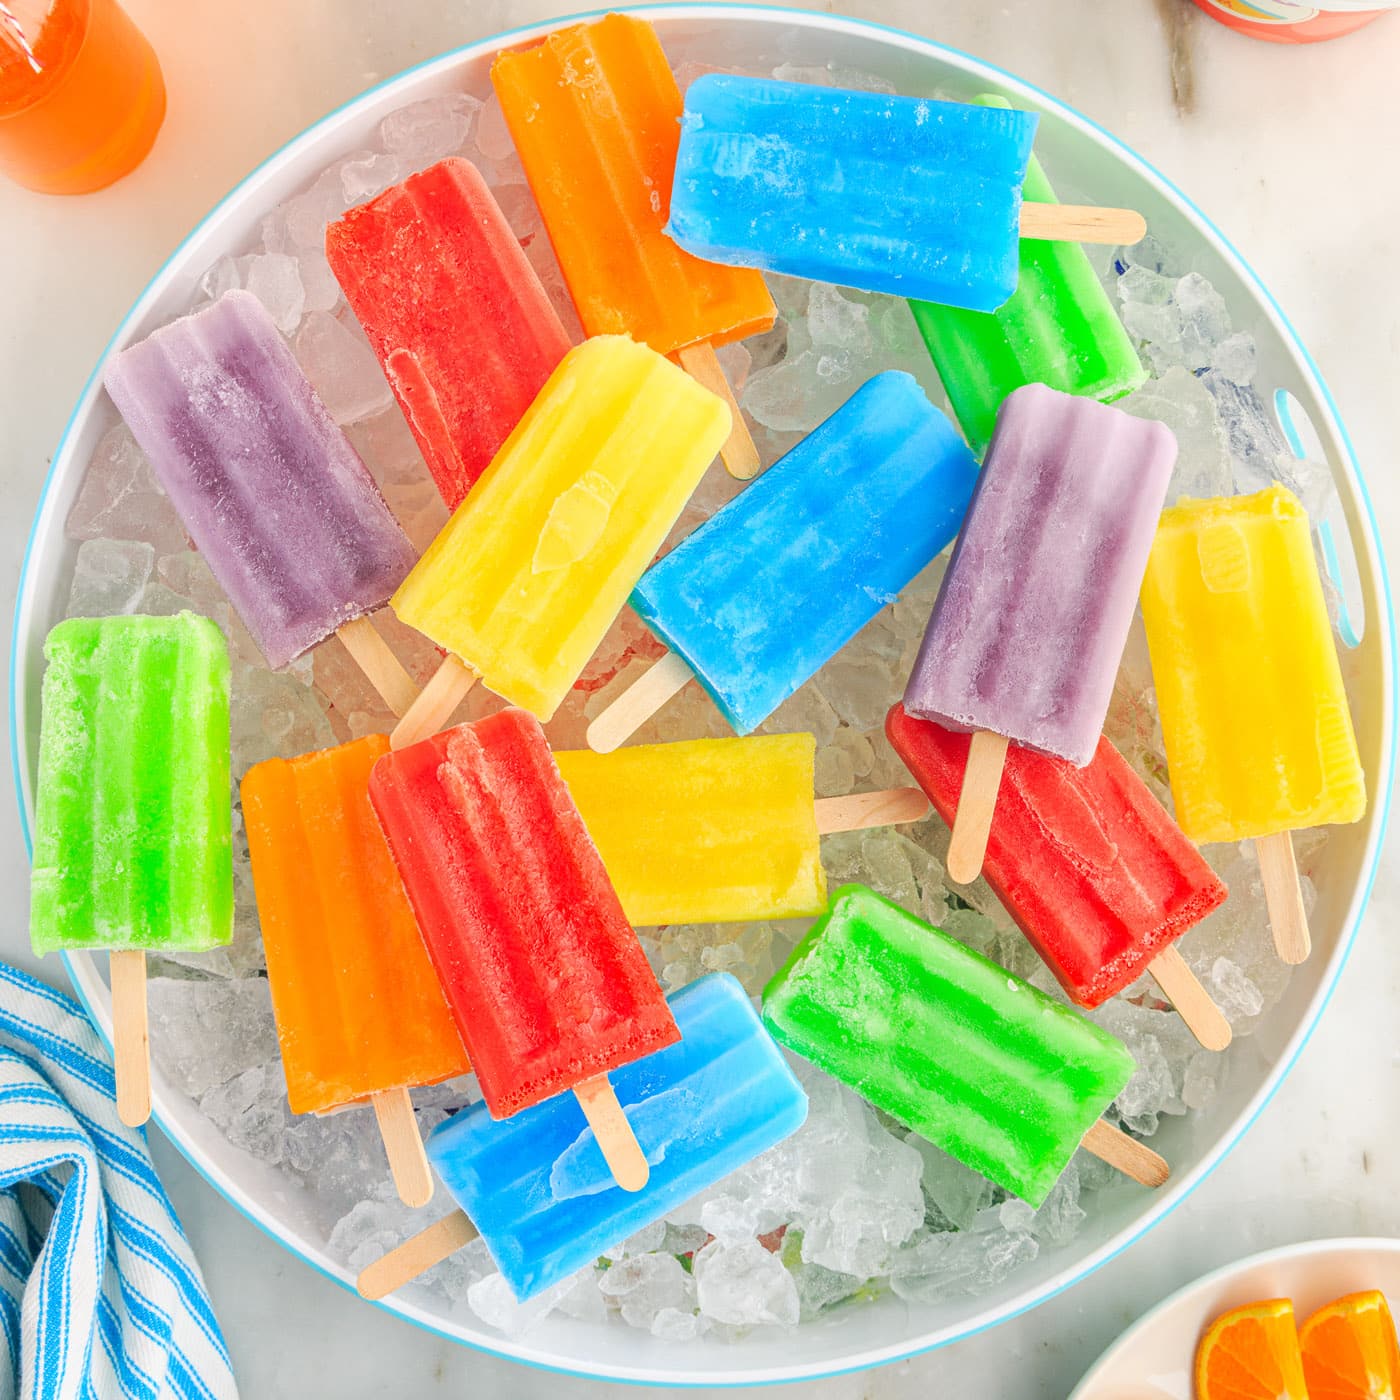 Jello Popsicles - Amanda's Cookin' - Ice Cream & Frozen Treats